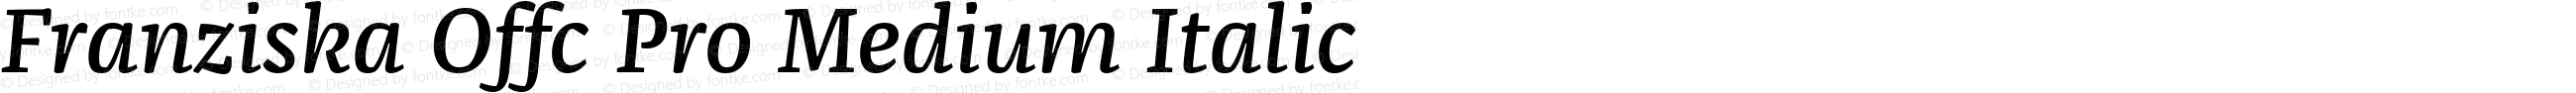 Franziska Offc Pro Medium Italic